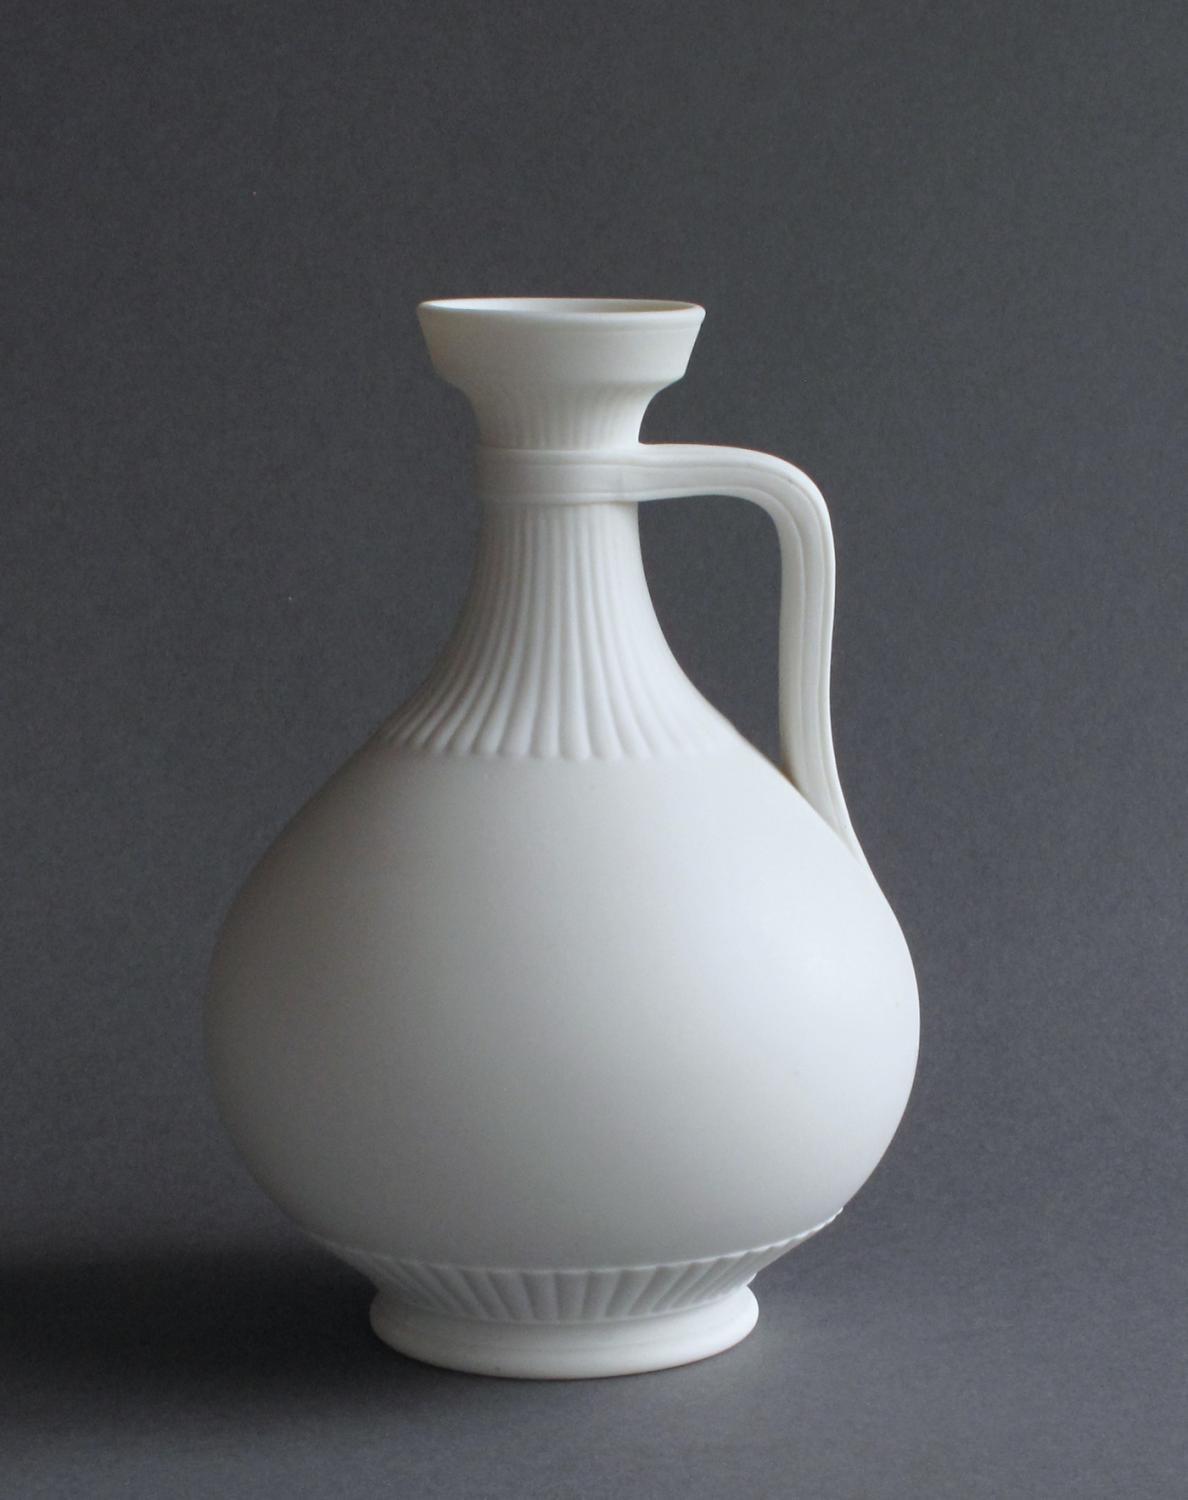 An elegant Parian jug or ewer by Minton